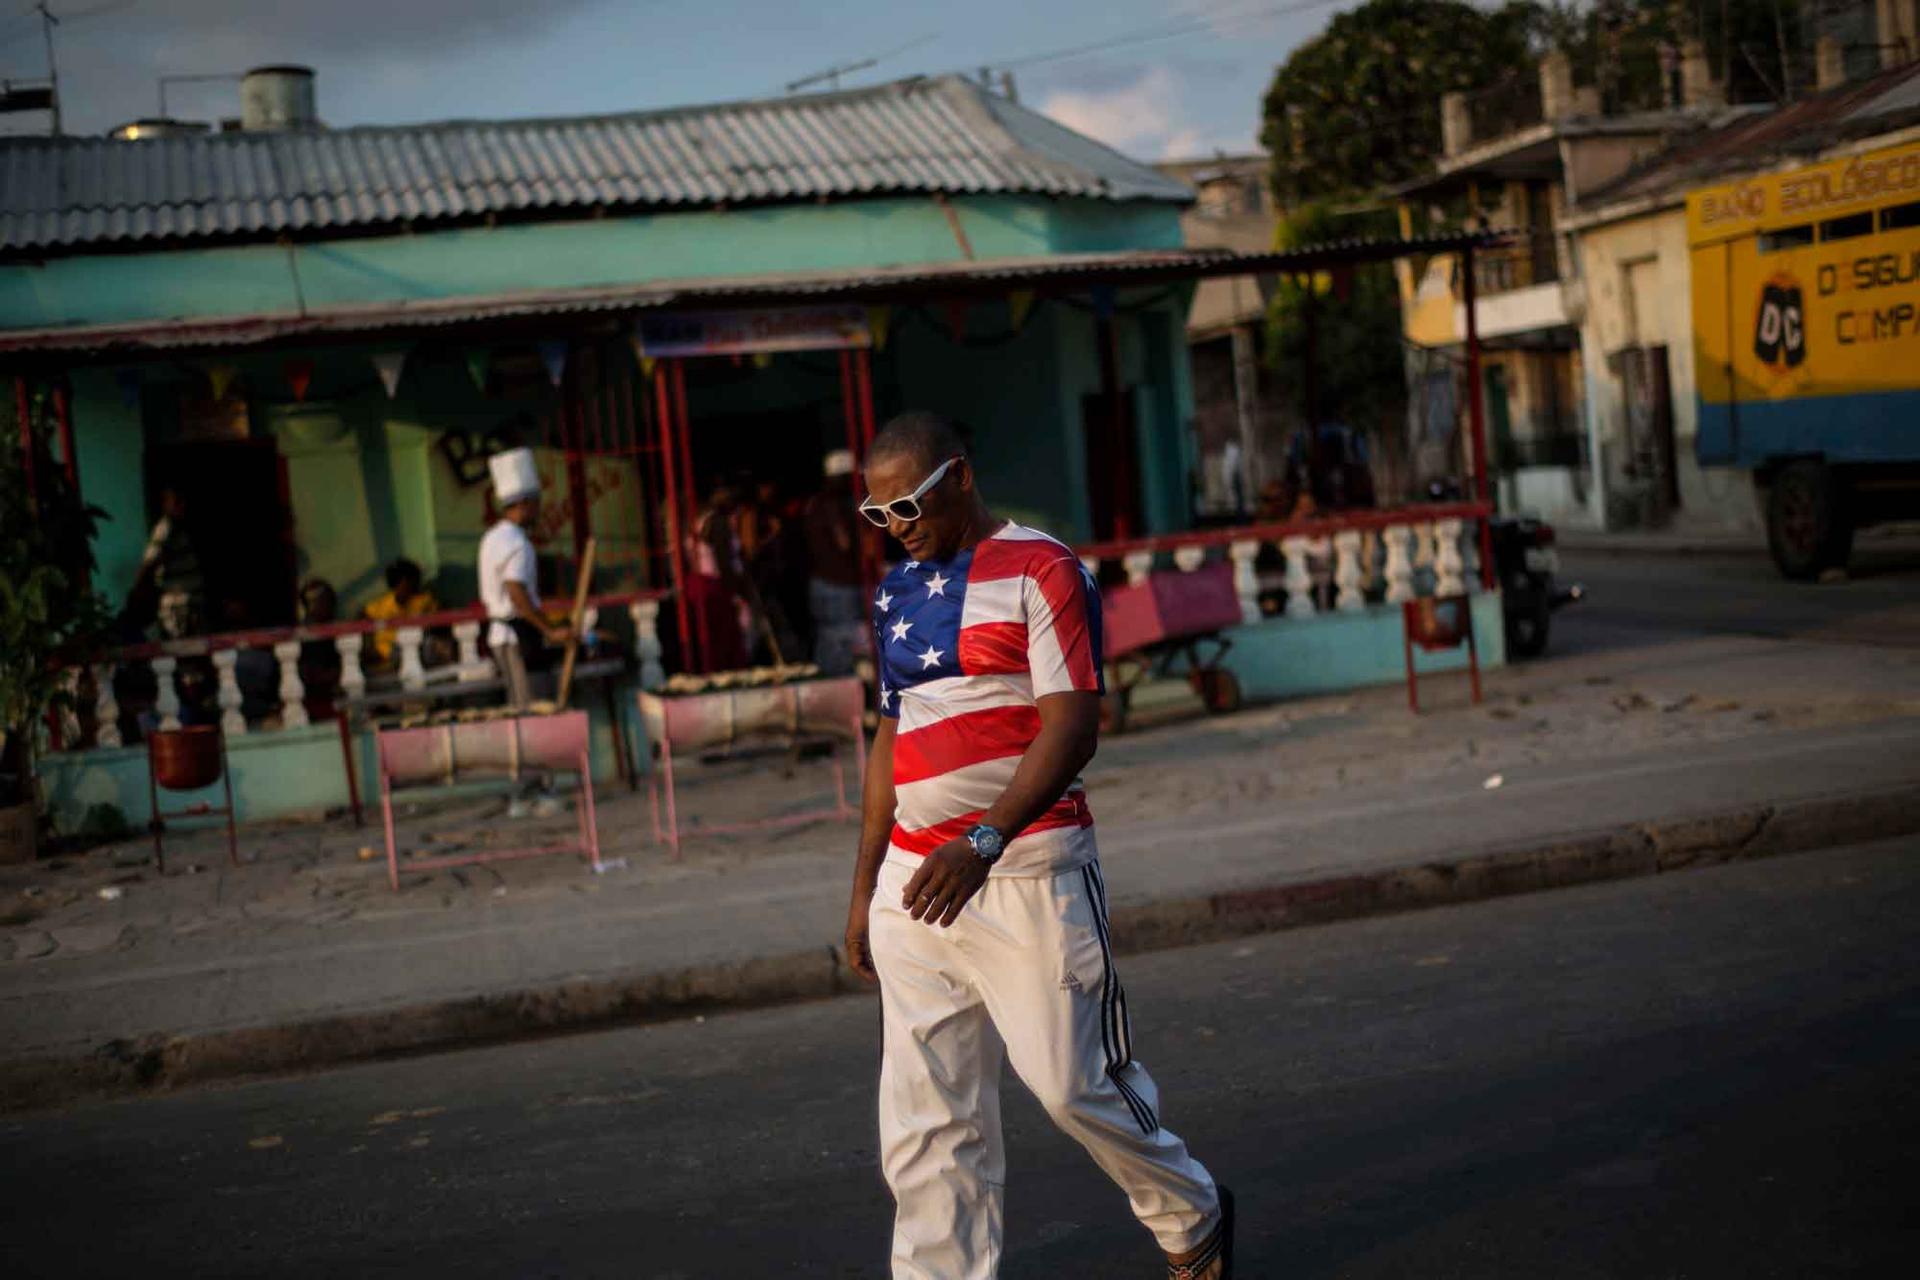 A man wears a shirt with a US flag design in Santiago, Cuba, March, 2015.